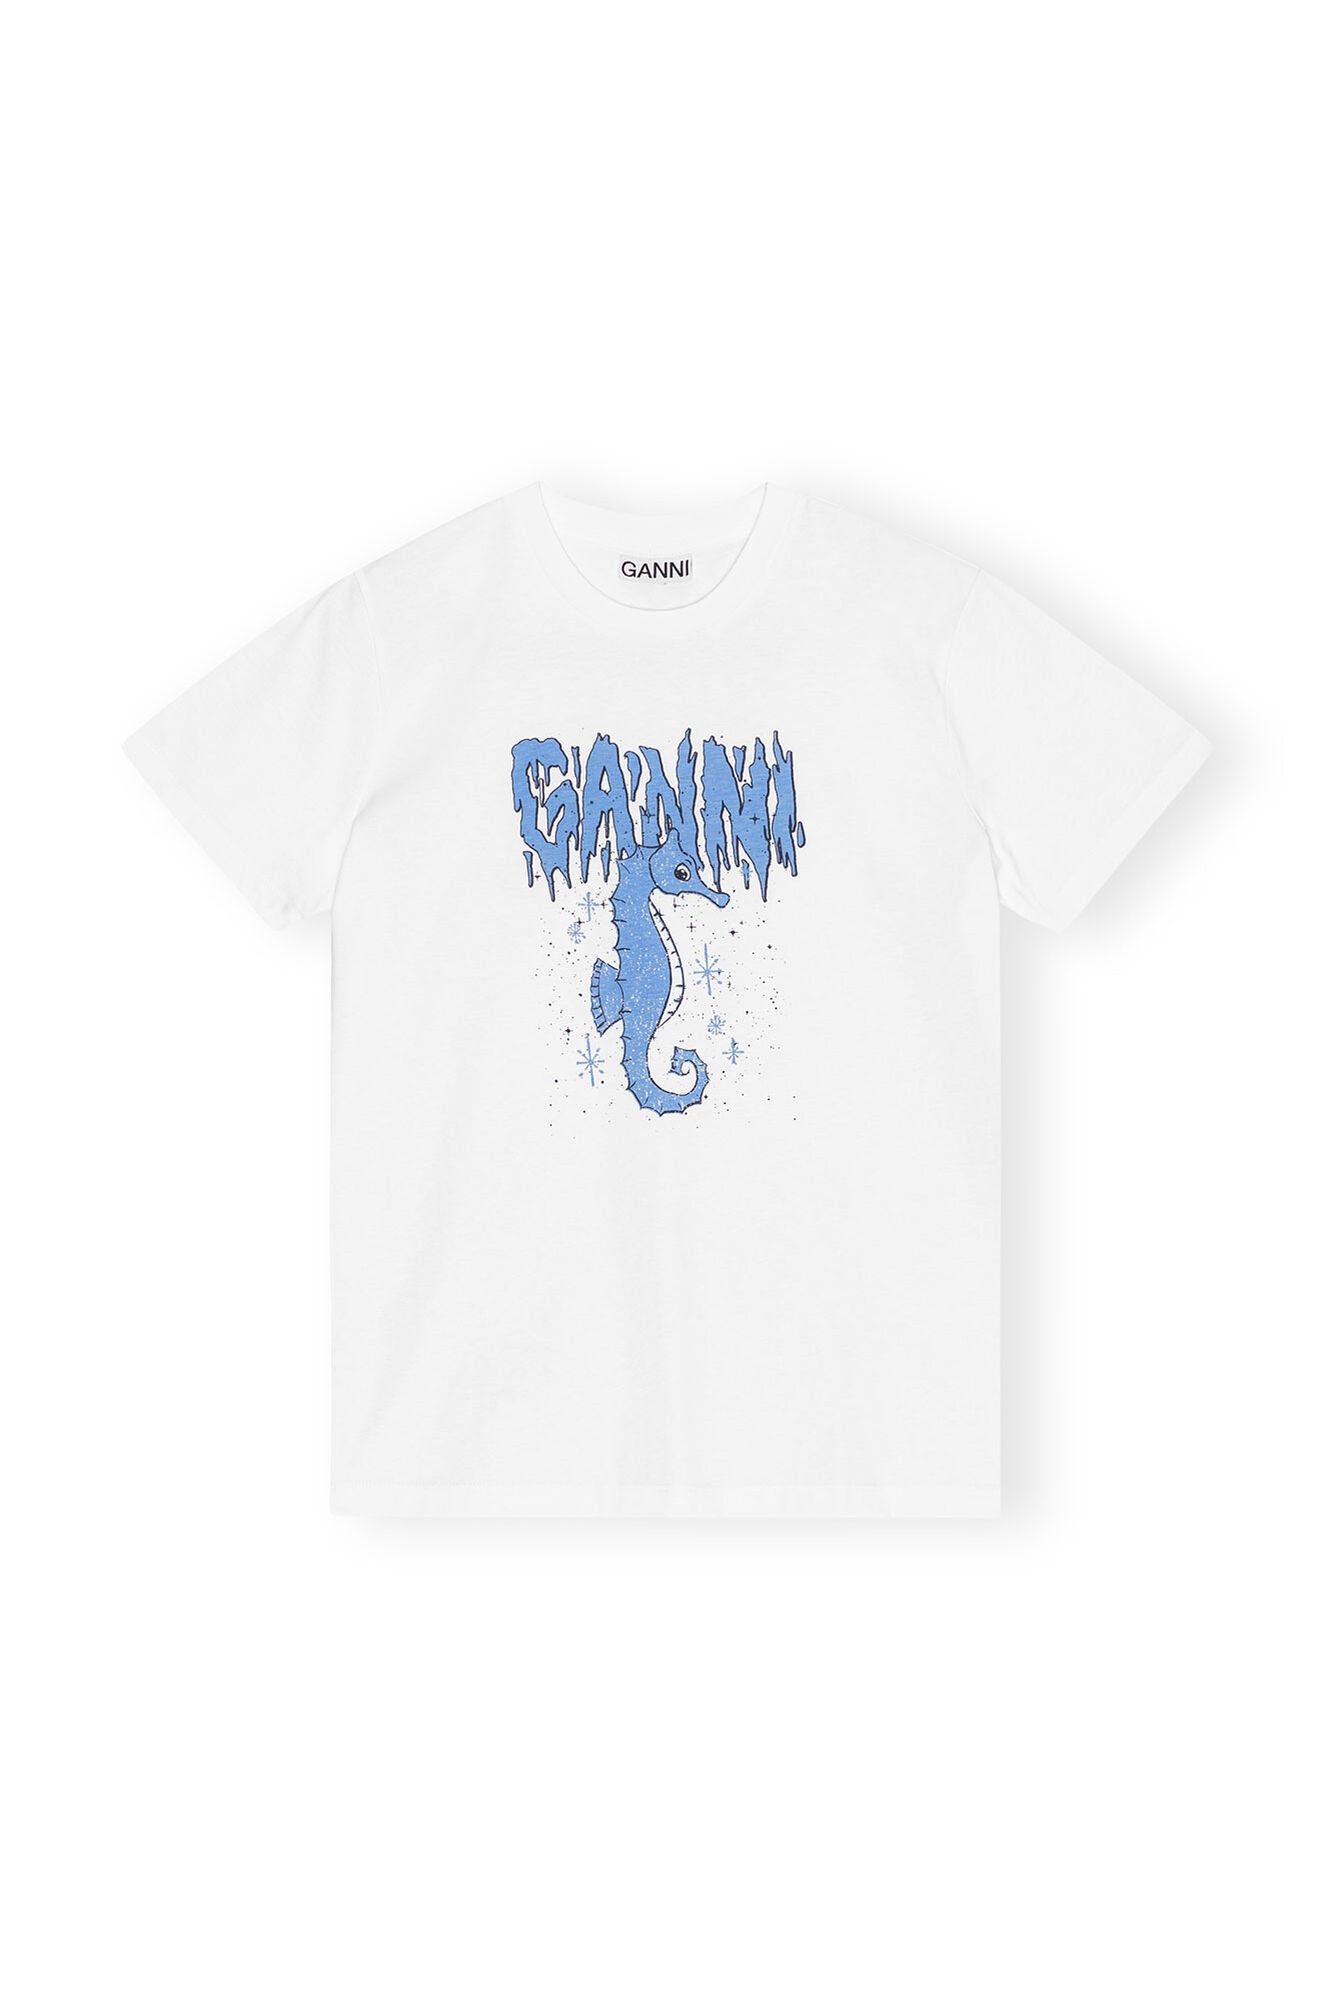 Ganni Basic Jersey Seahorse Relaxed T-shirt Bright White - hvittrad.no